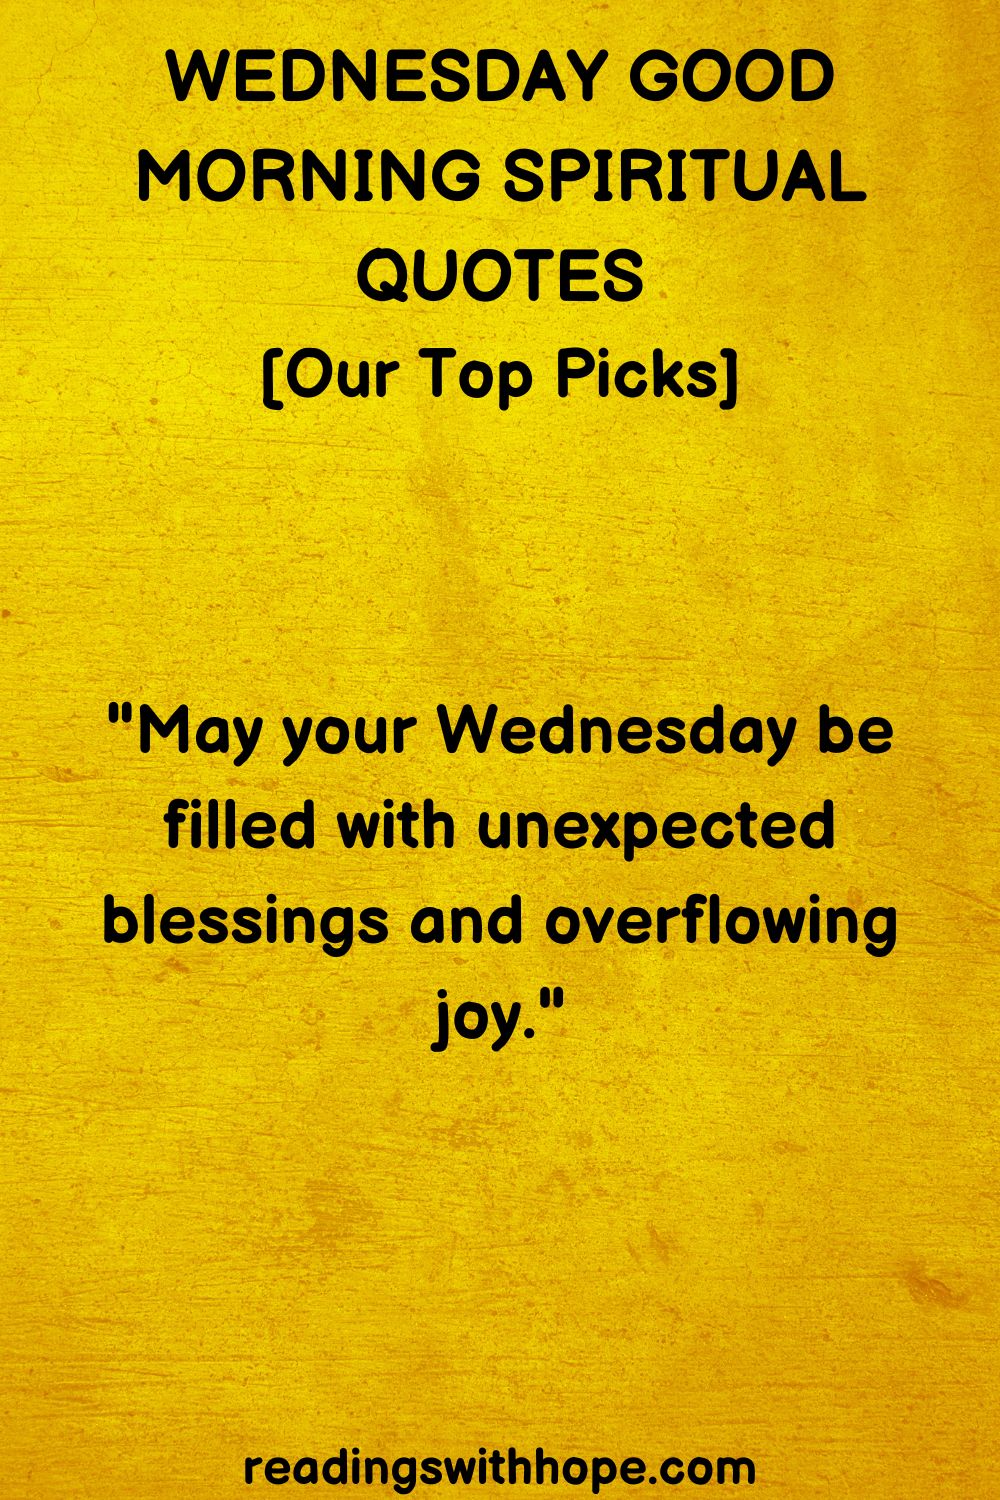 Wednesday Good Morning Spiritual Quotes